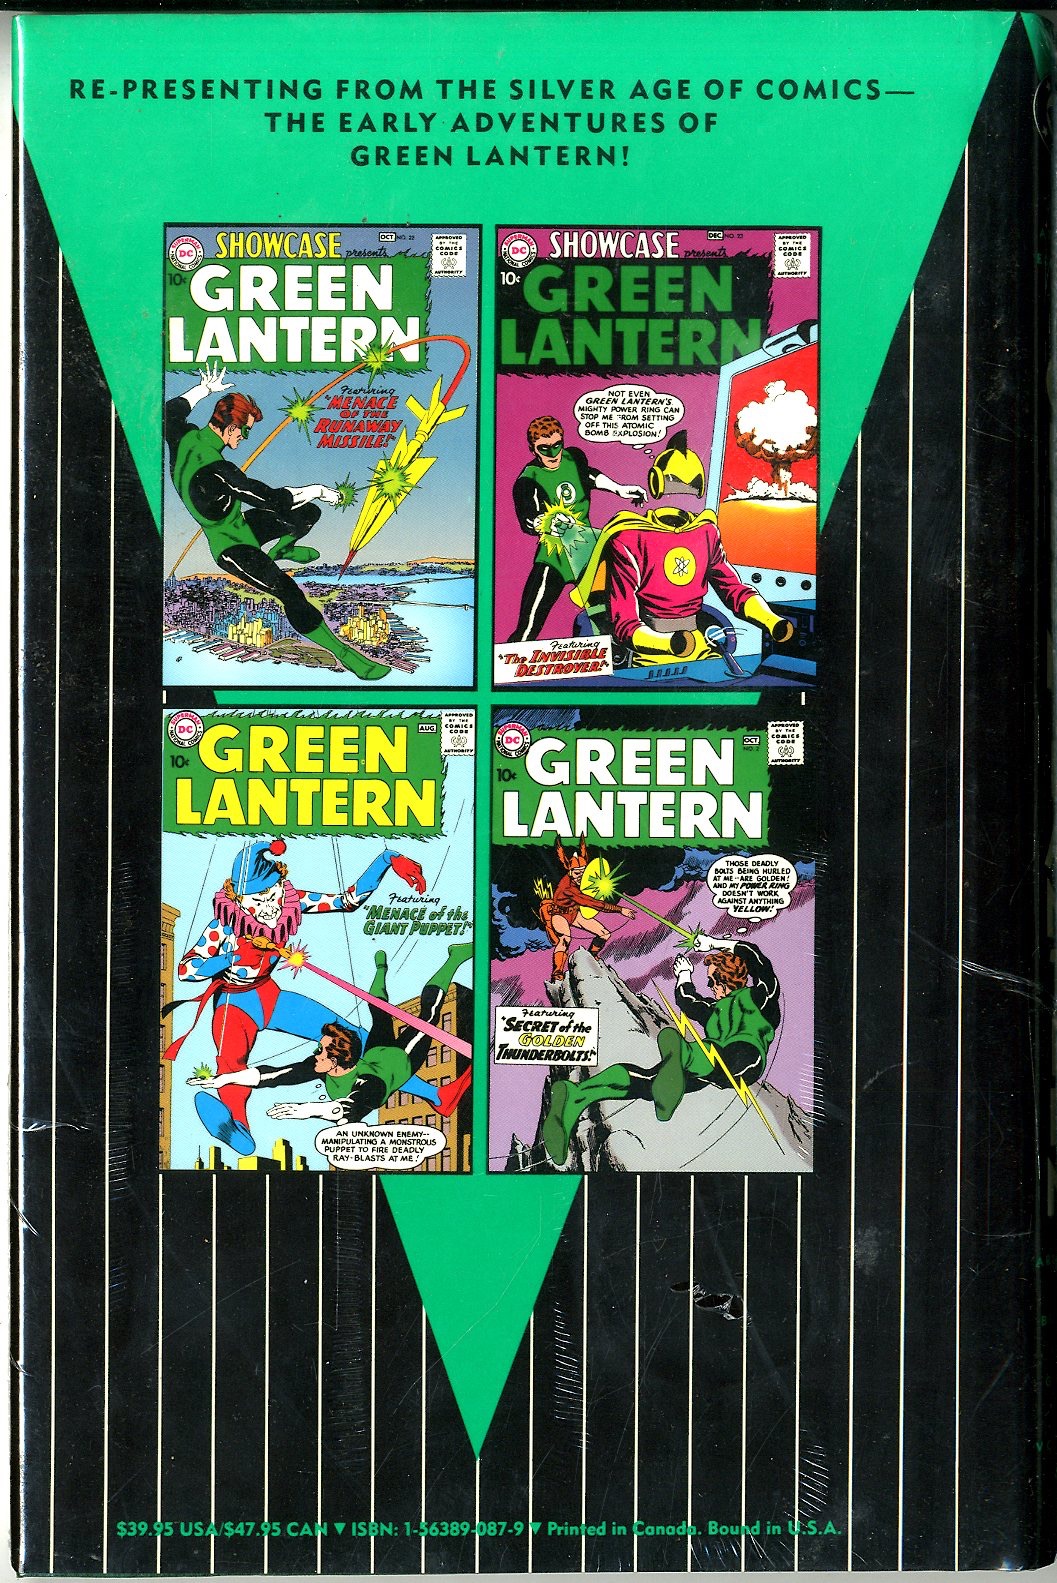 Archive Editions Green Lantern - 11258